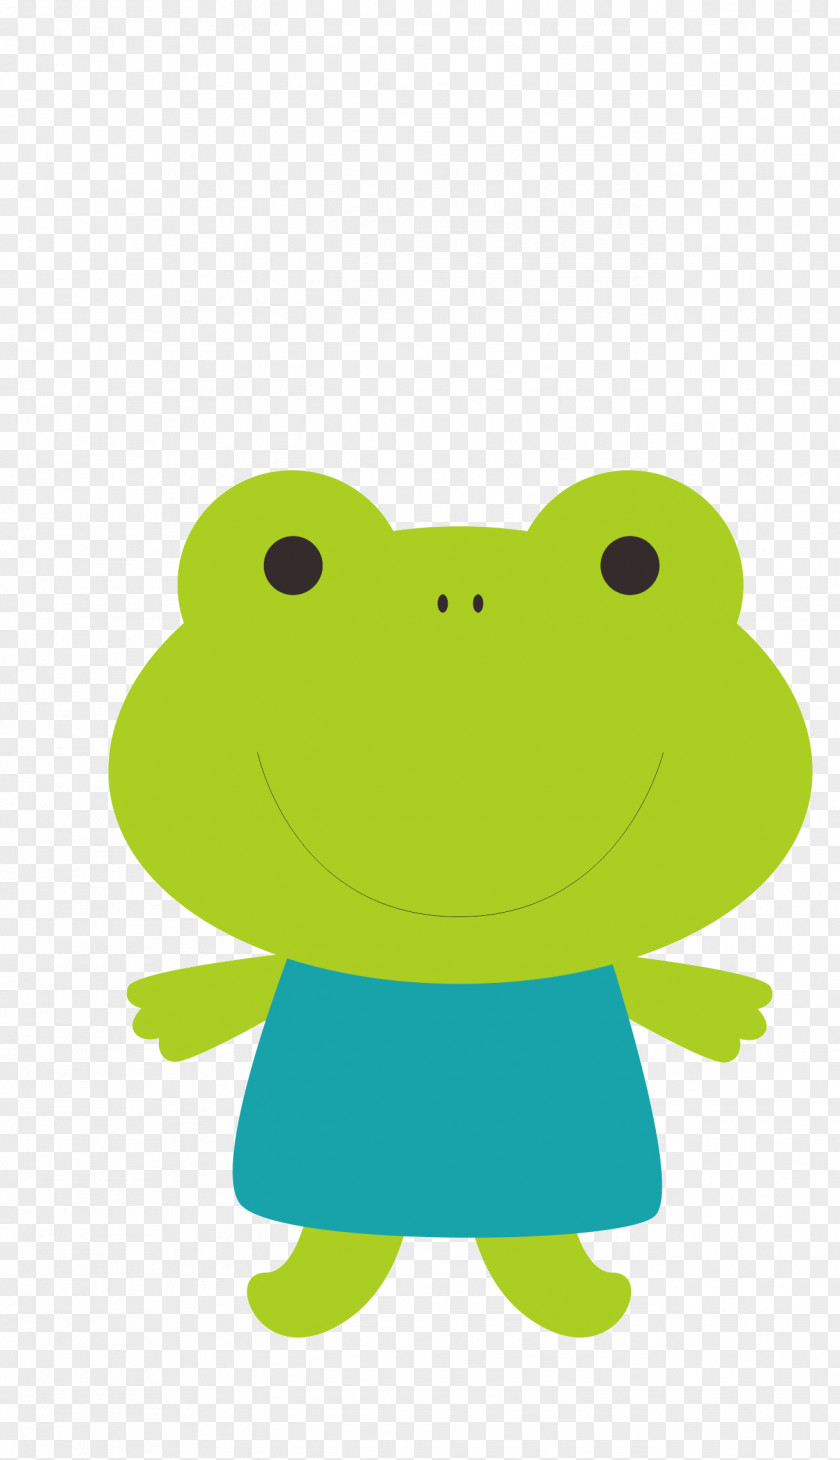 Bull Frog Cartoon Image Clip Art PNG